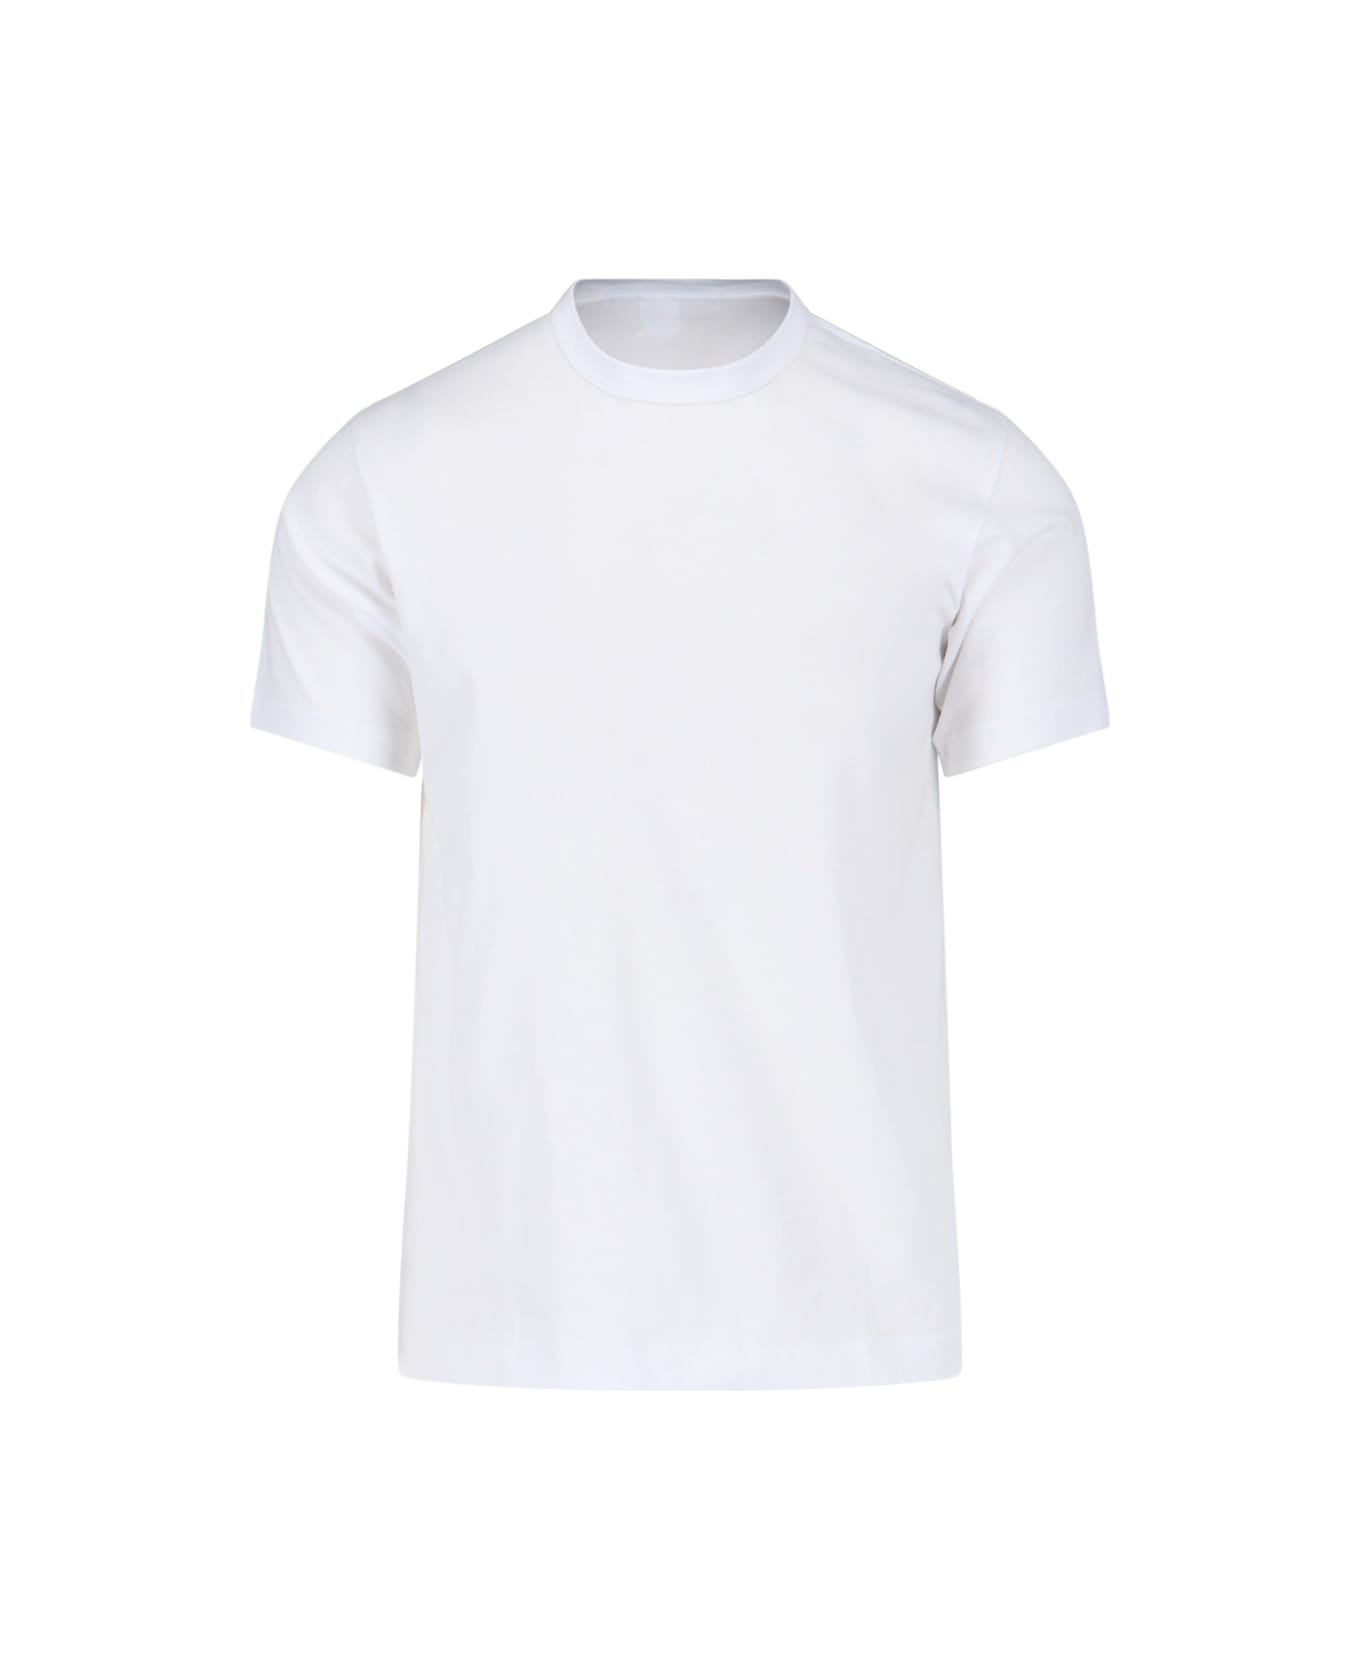 Comme des Garçons Shirt Basic T-shirt - 2 WHITE